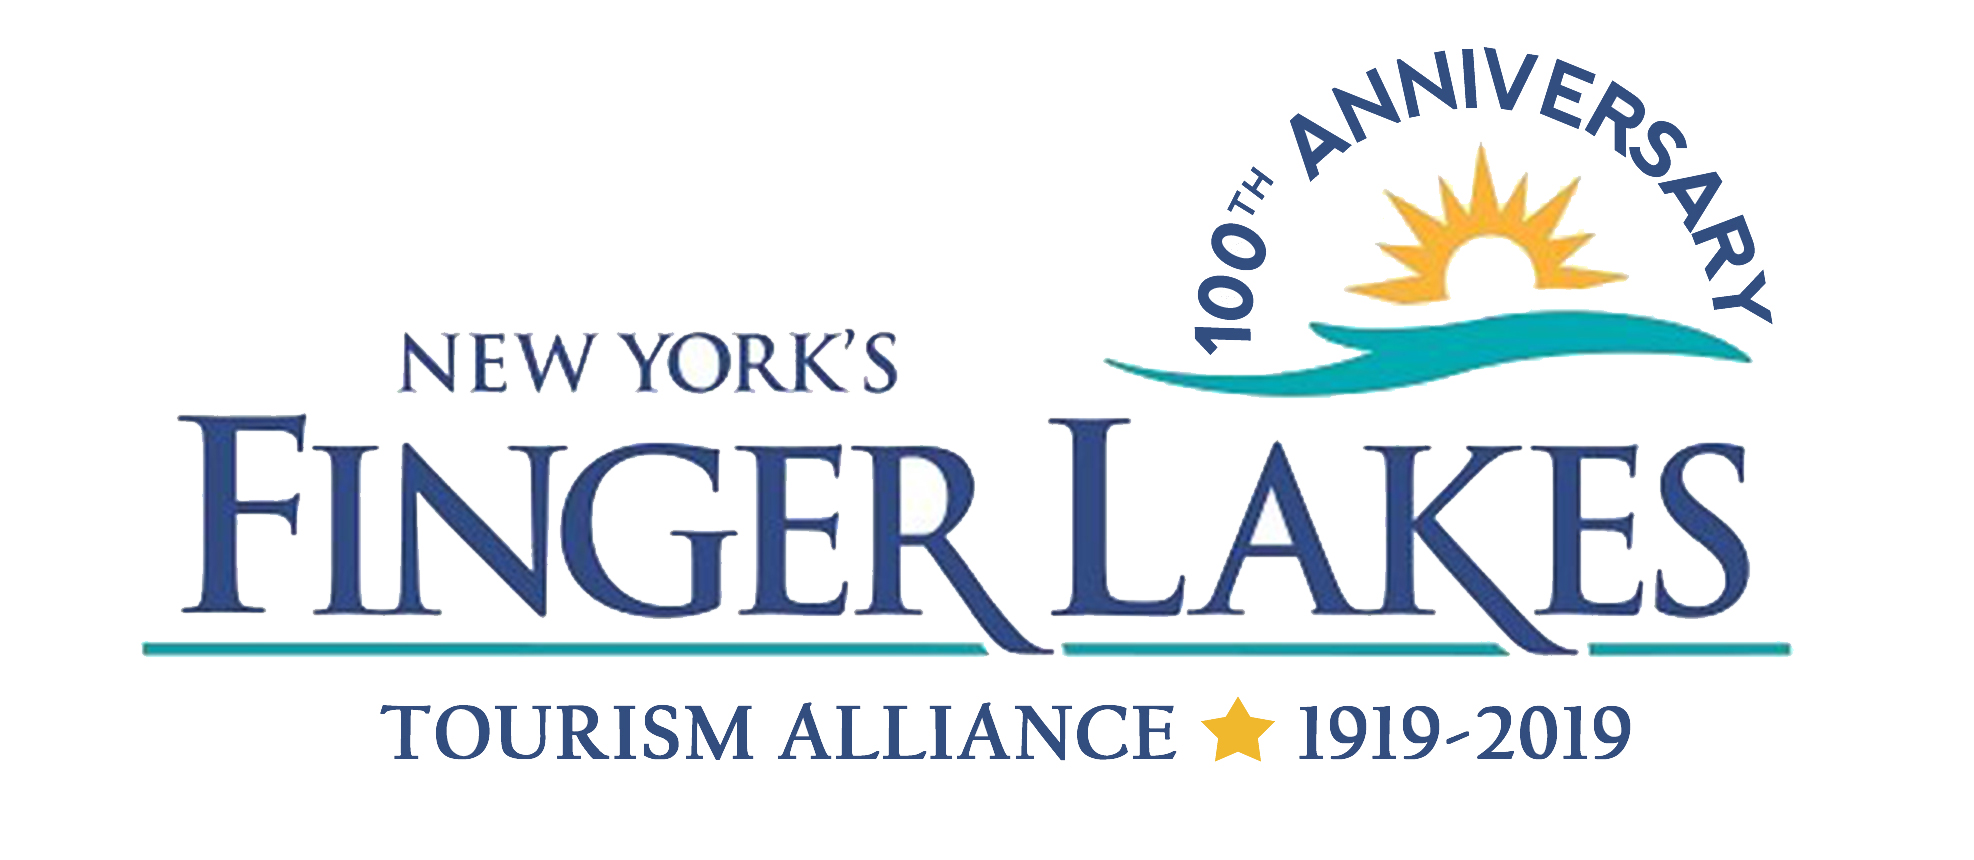 new york's finger lakes tourism alliance